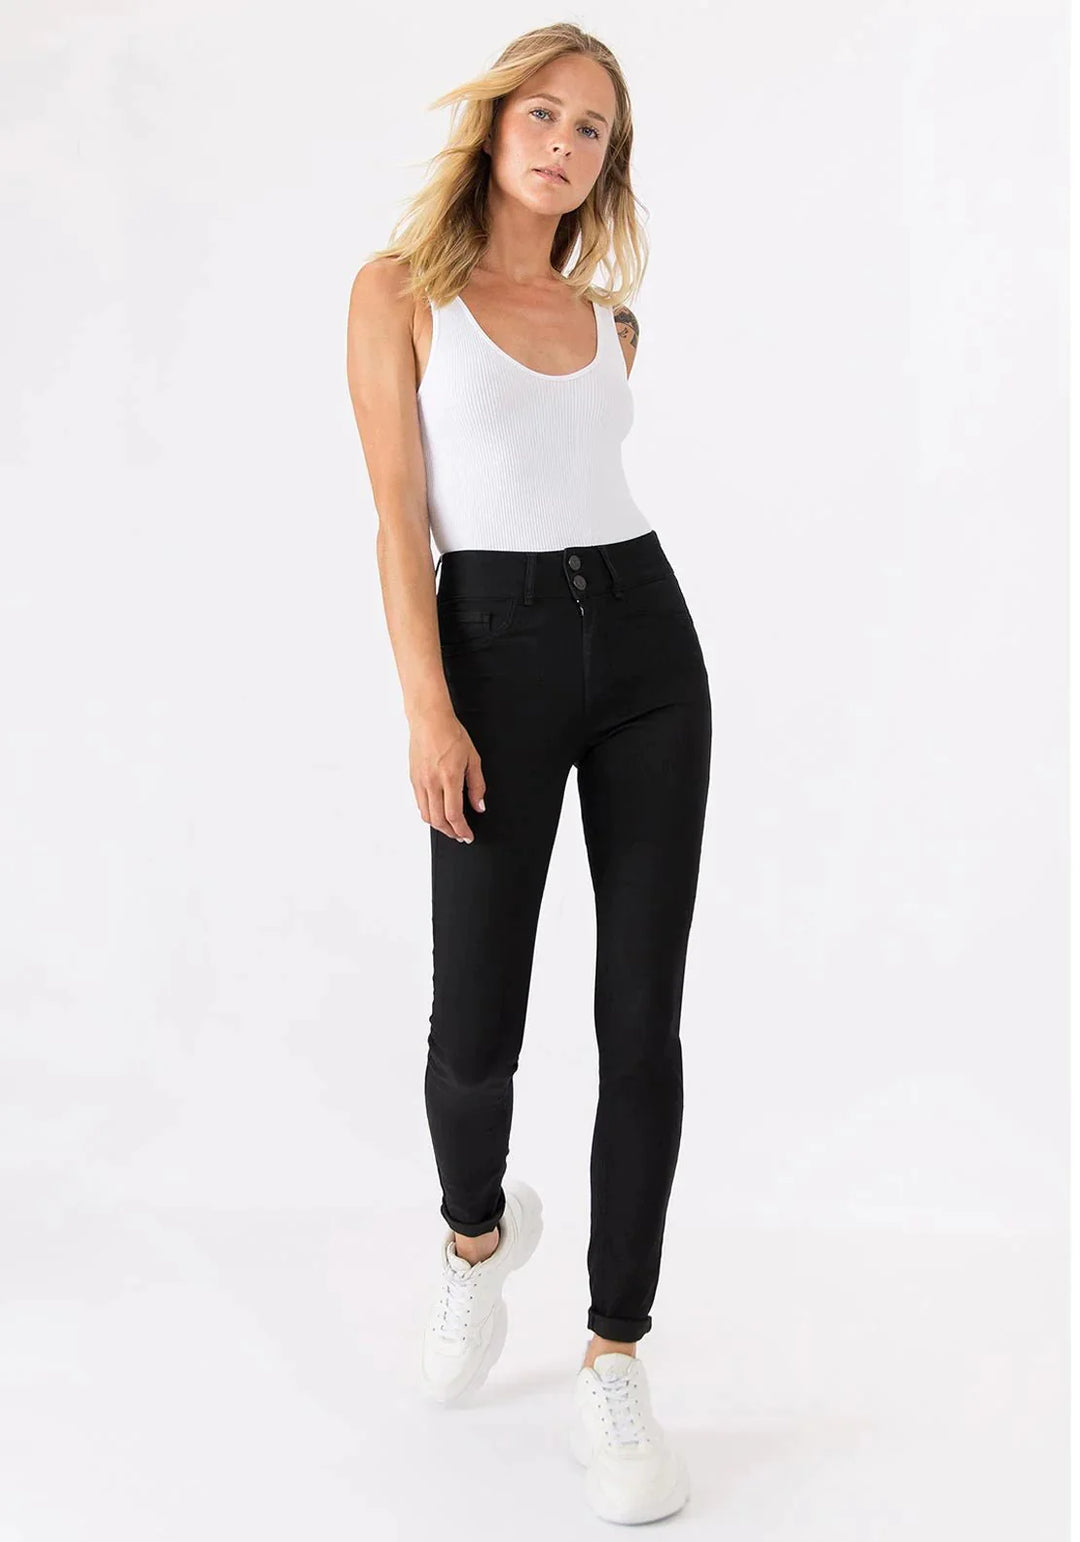 Tiffosi One Size Jeans Double_Comfort_10 Black - Sitara Morgan